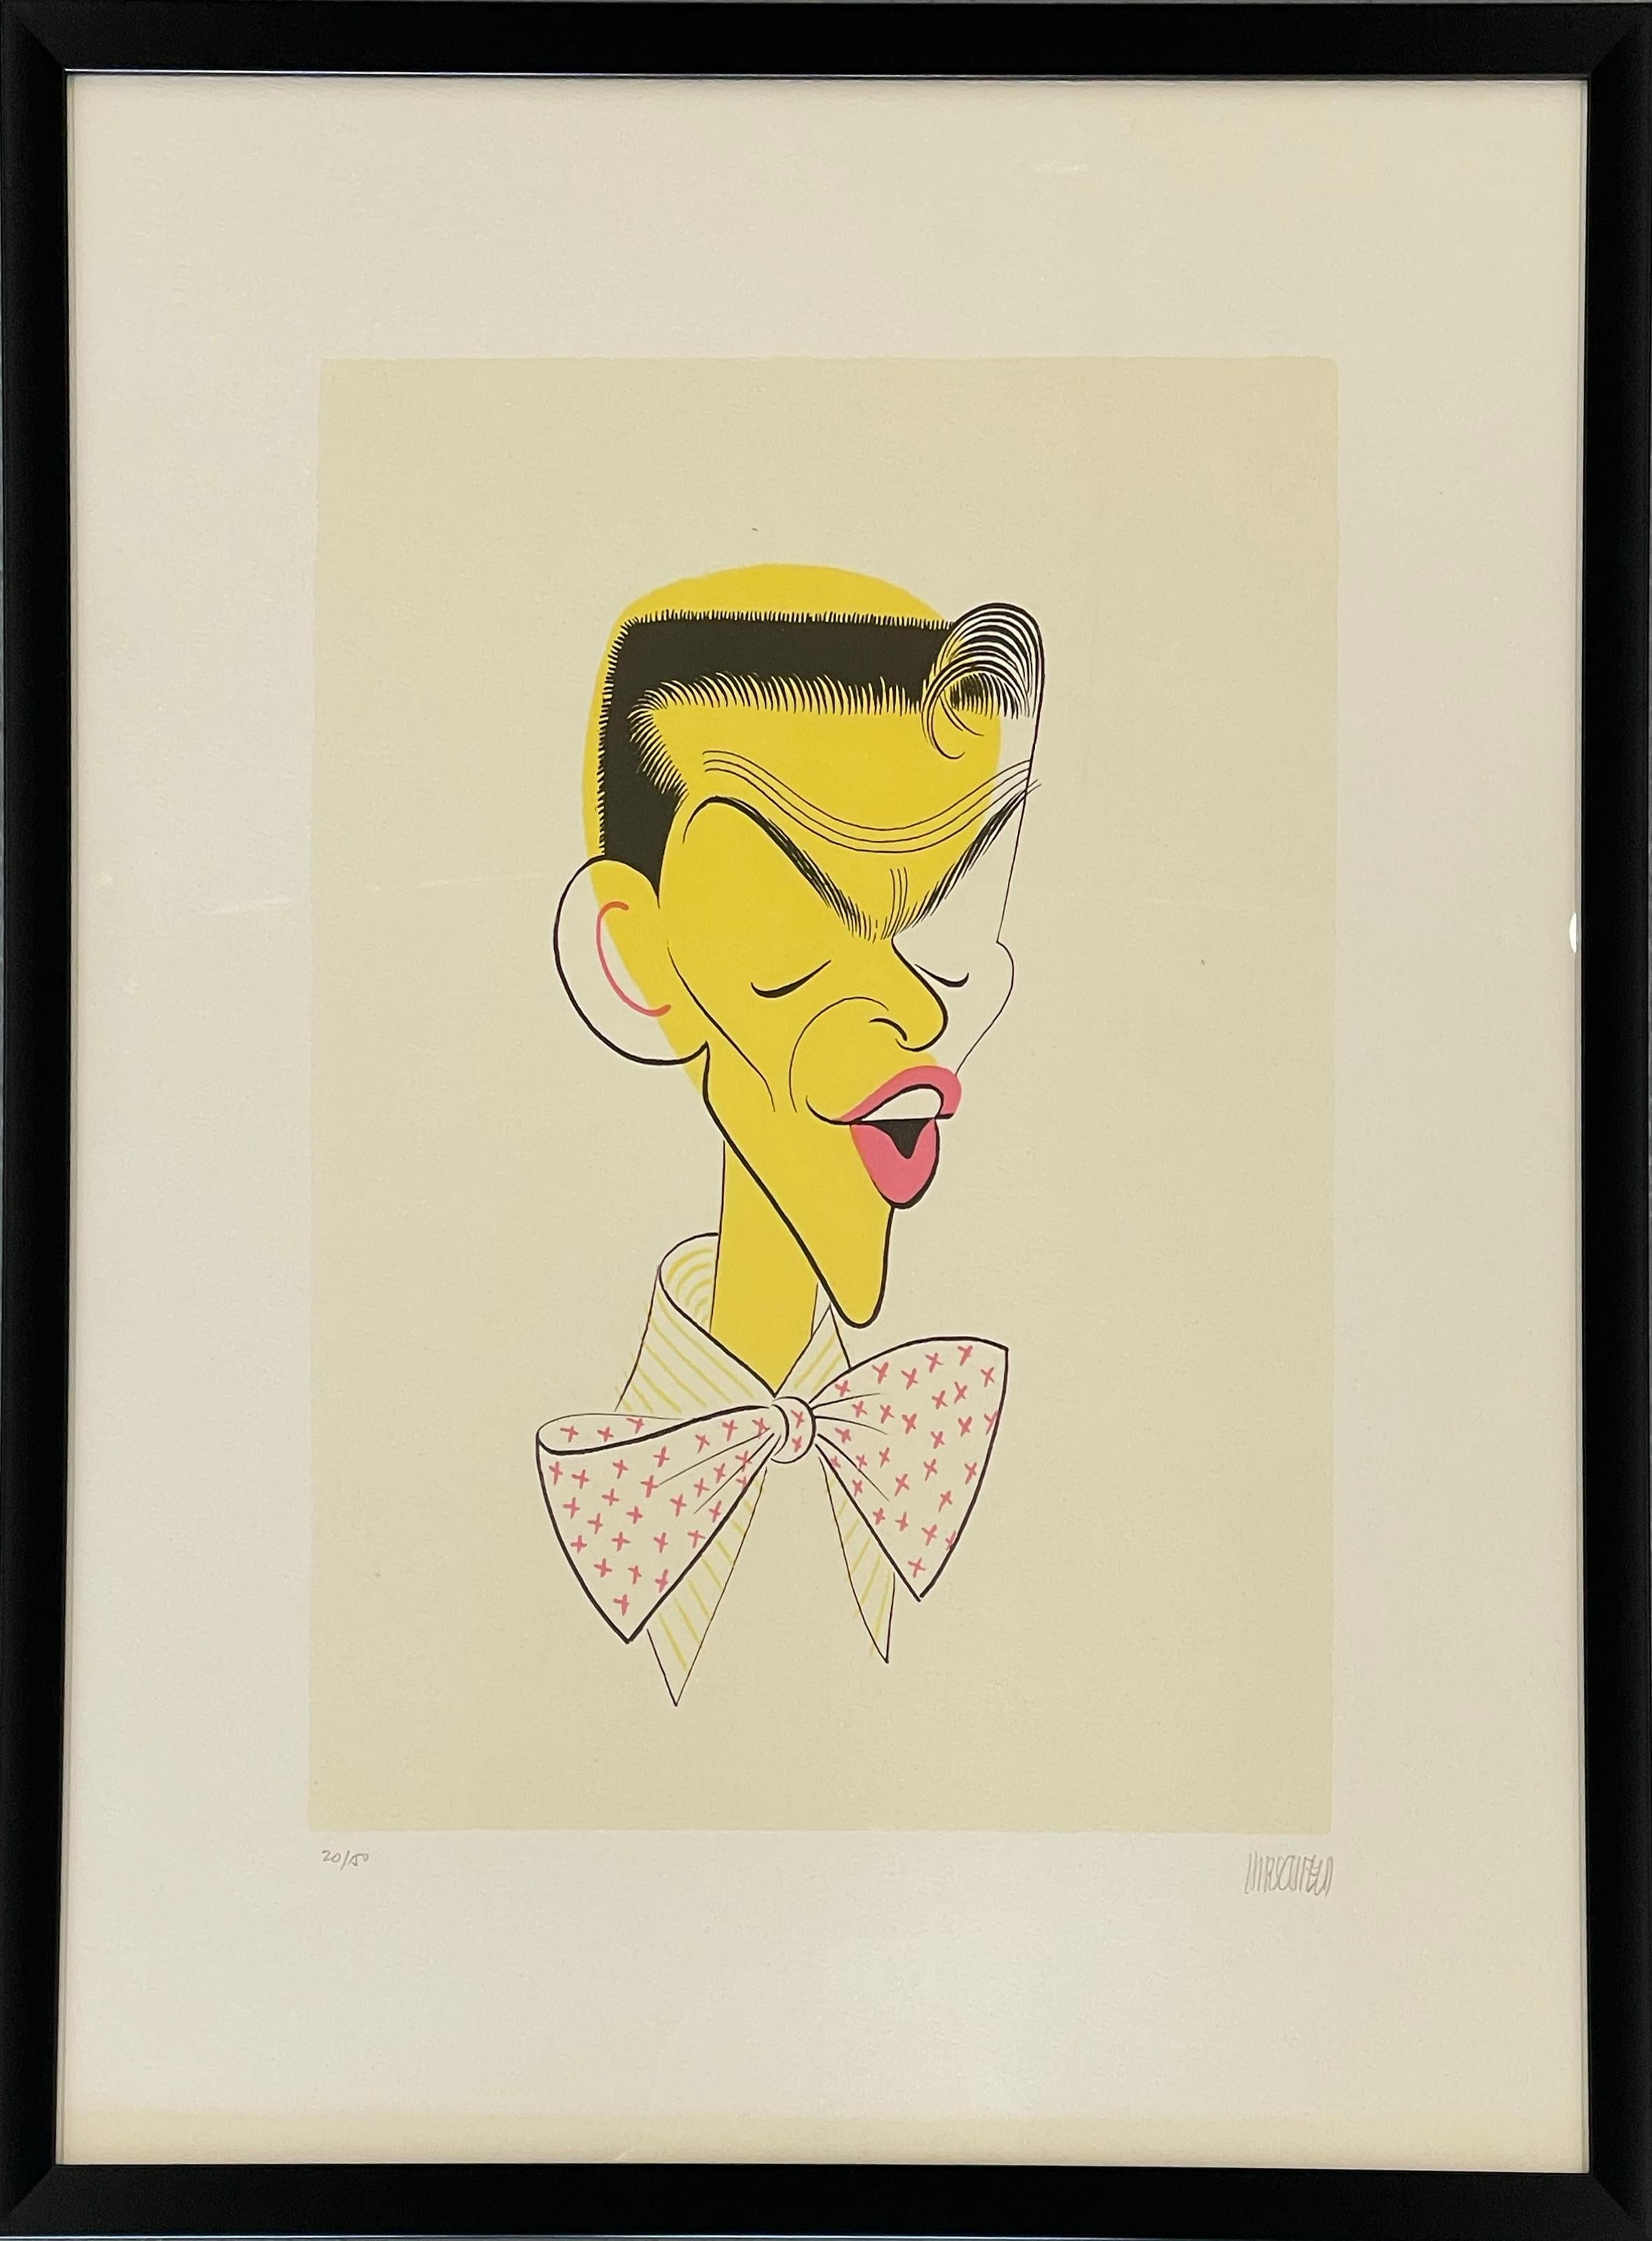 Frank Sinatra - Print by Albert Al Hirschfeld